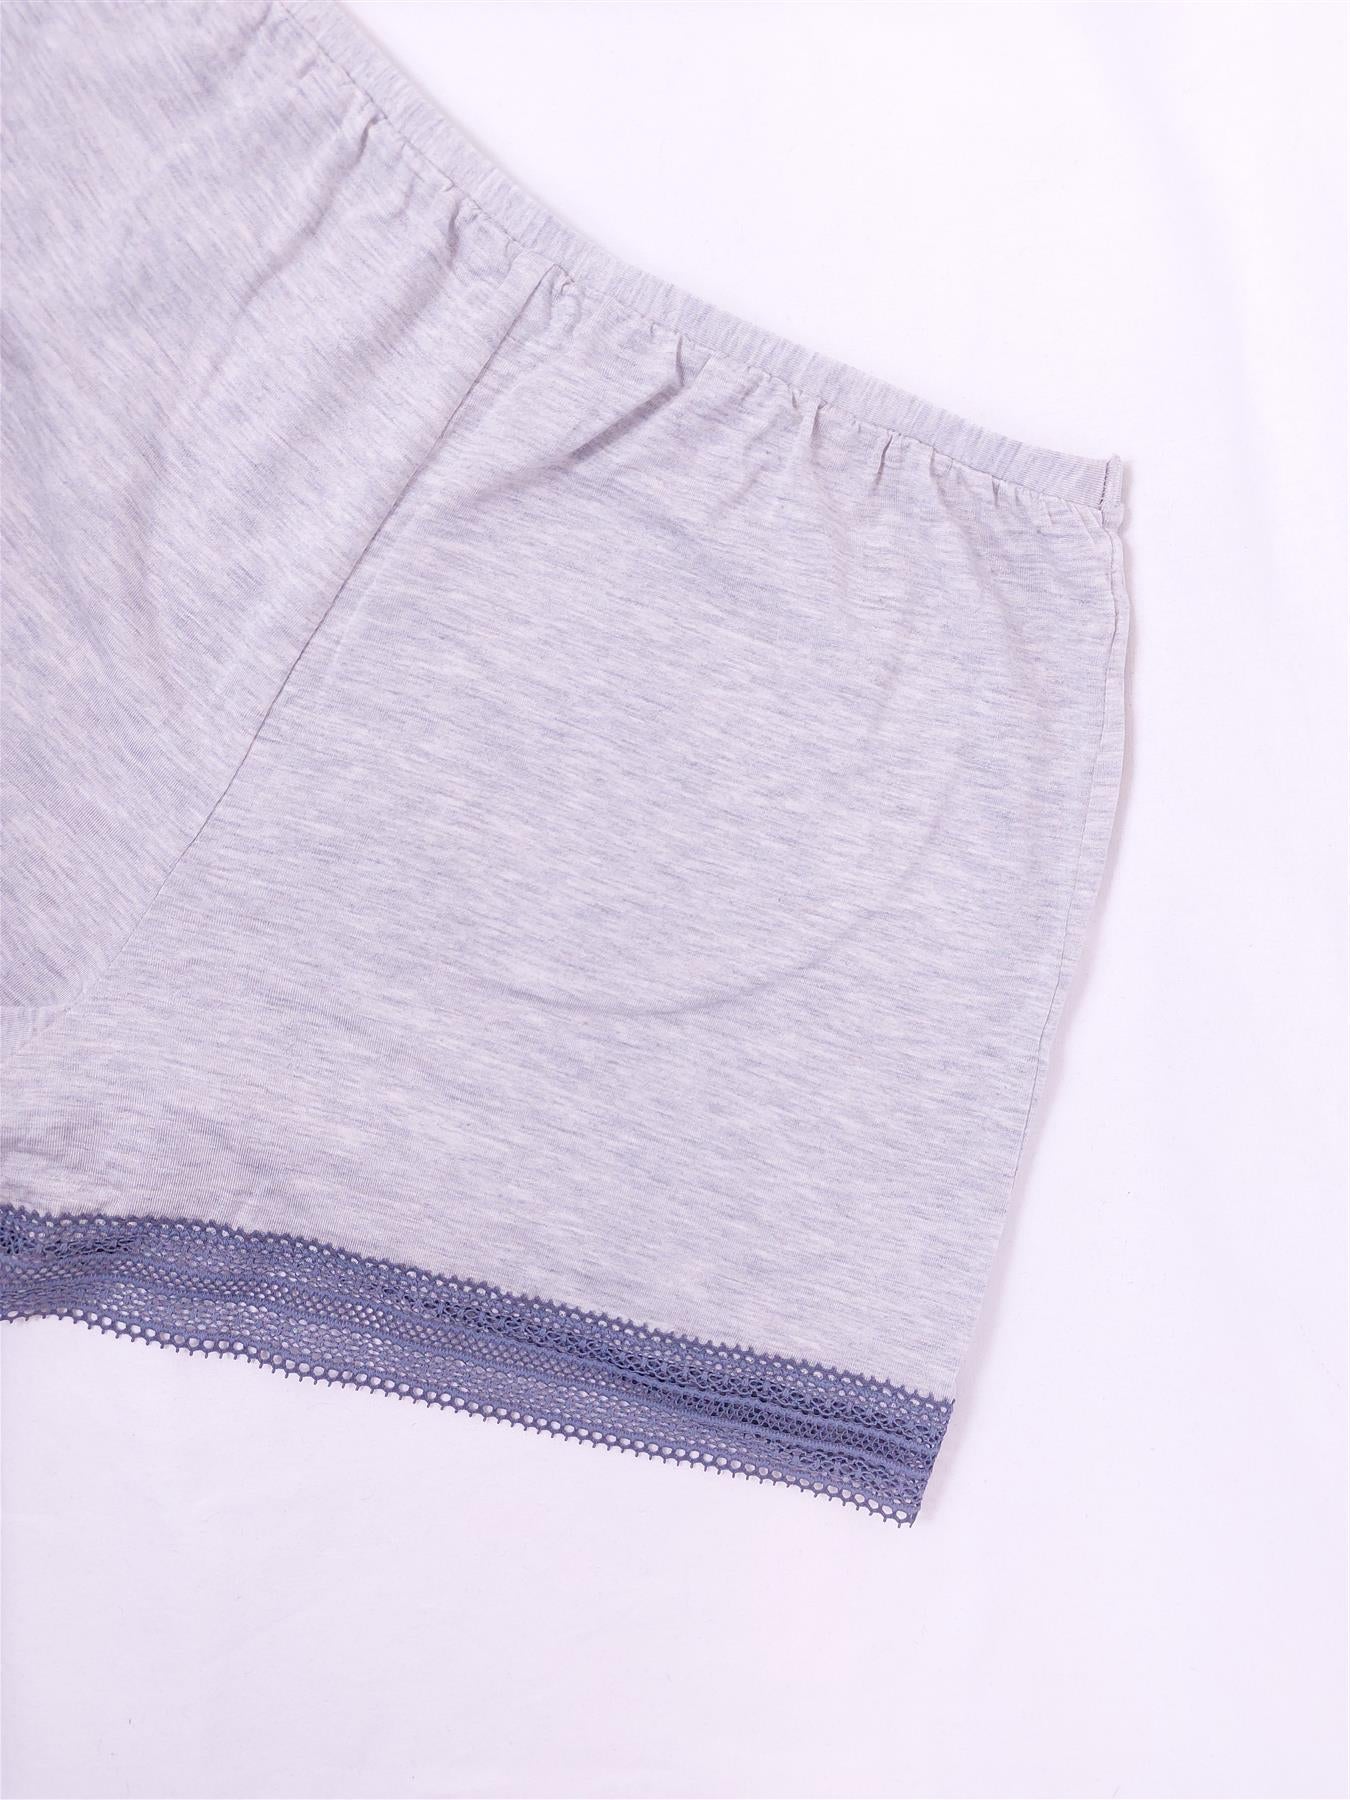 Women's Pyjama Bottoms Shorts Loungewear Soft Comfy Stretch Lace Trim Grey Blue